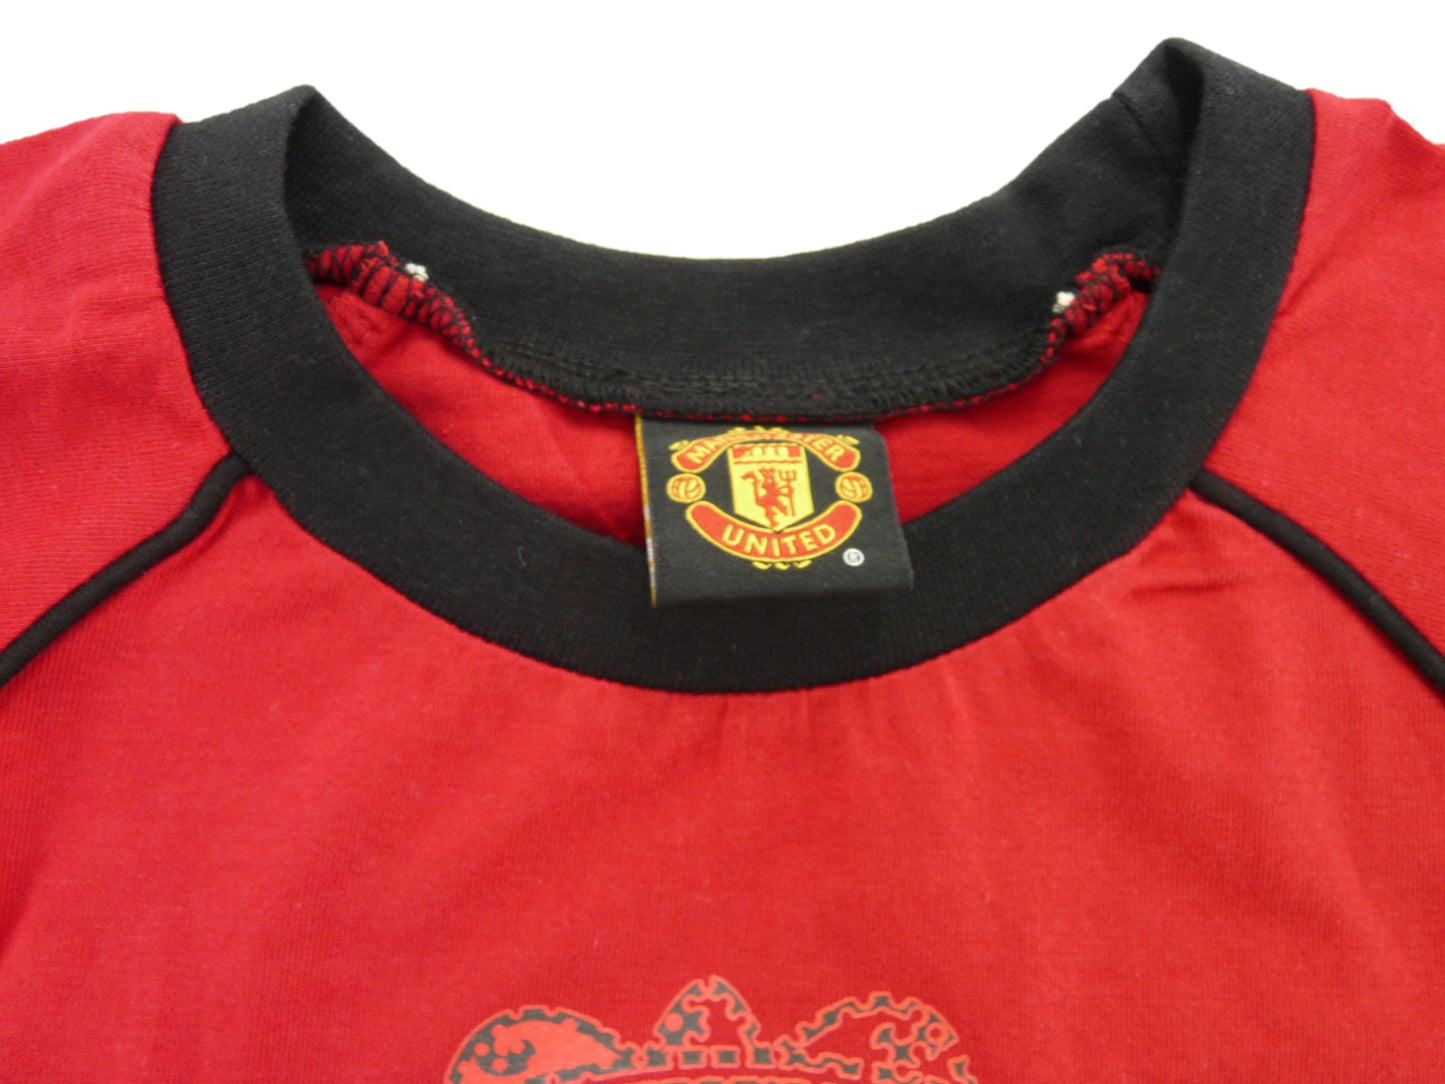 Manchester United Football Club Boys Pyjamas 5-6 Years - Reduced Last Size Left